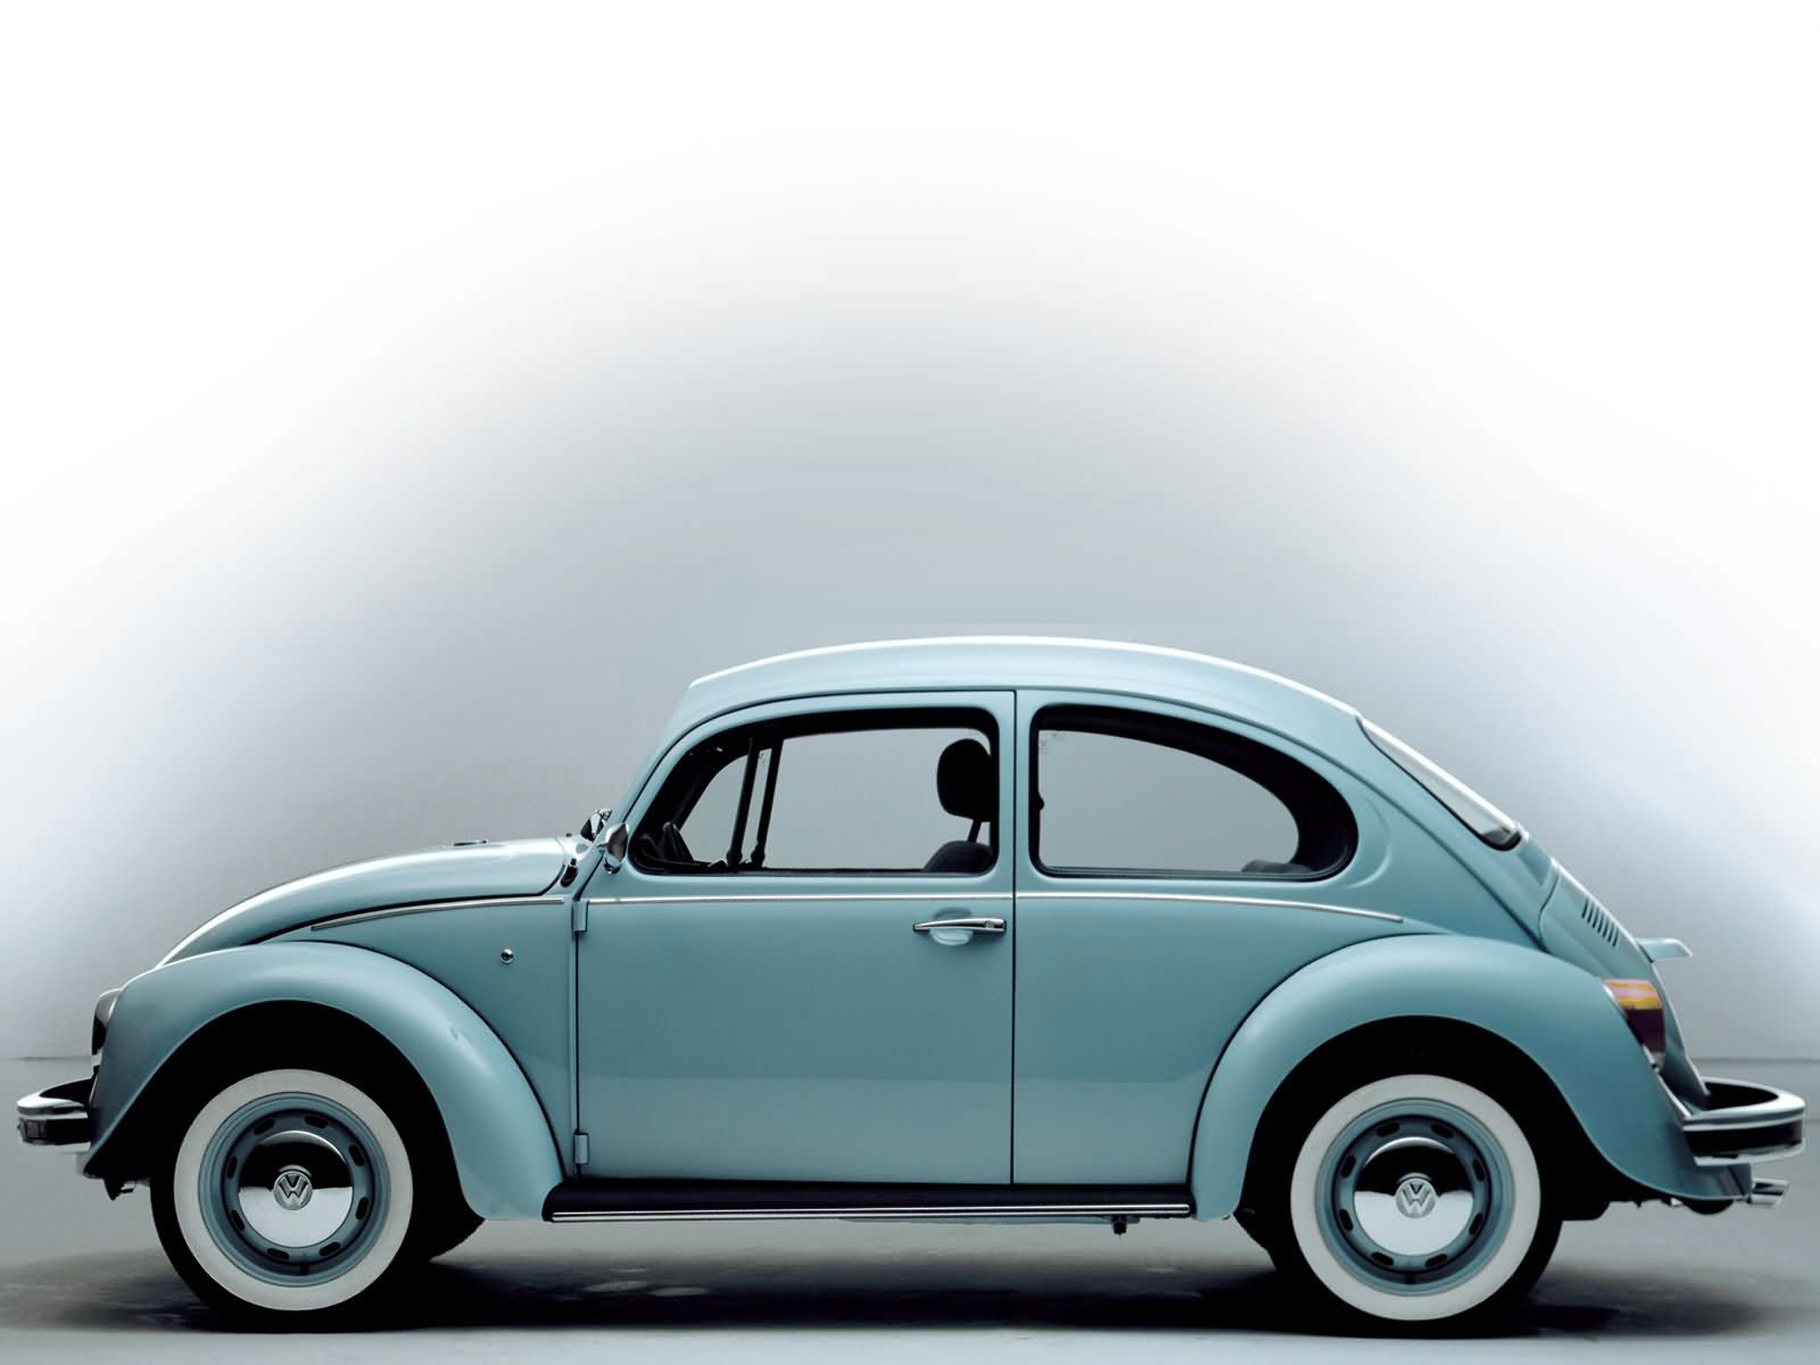 Retro Galeria - VW Beetle_136.jpg